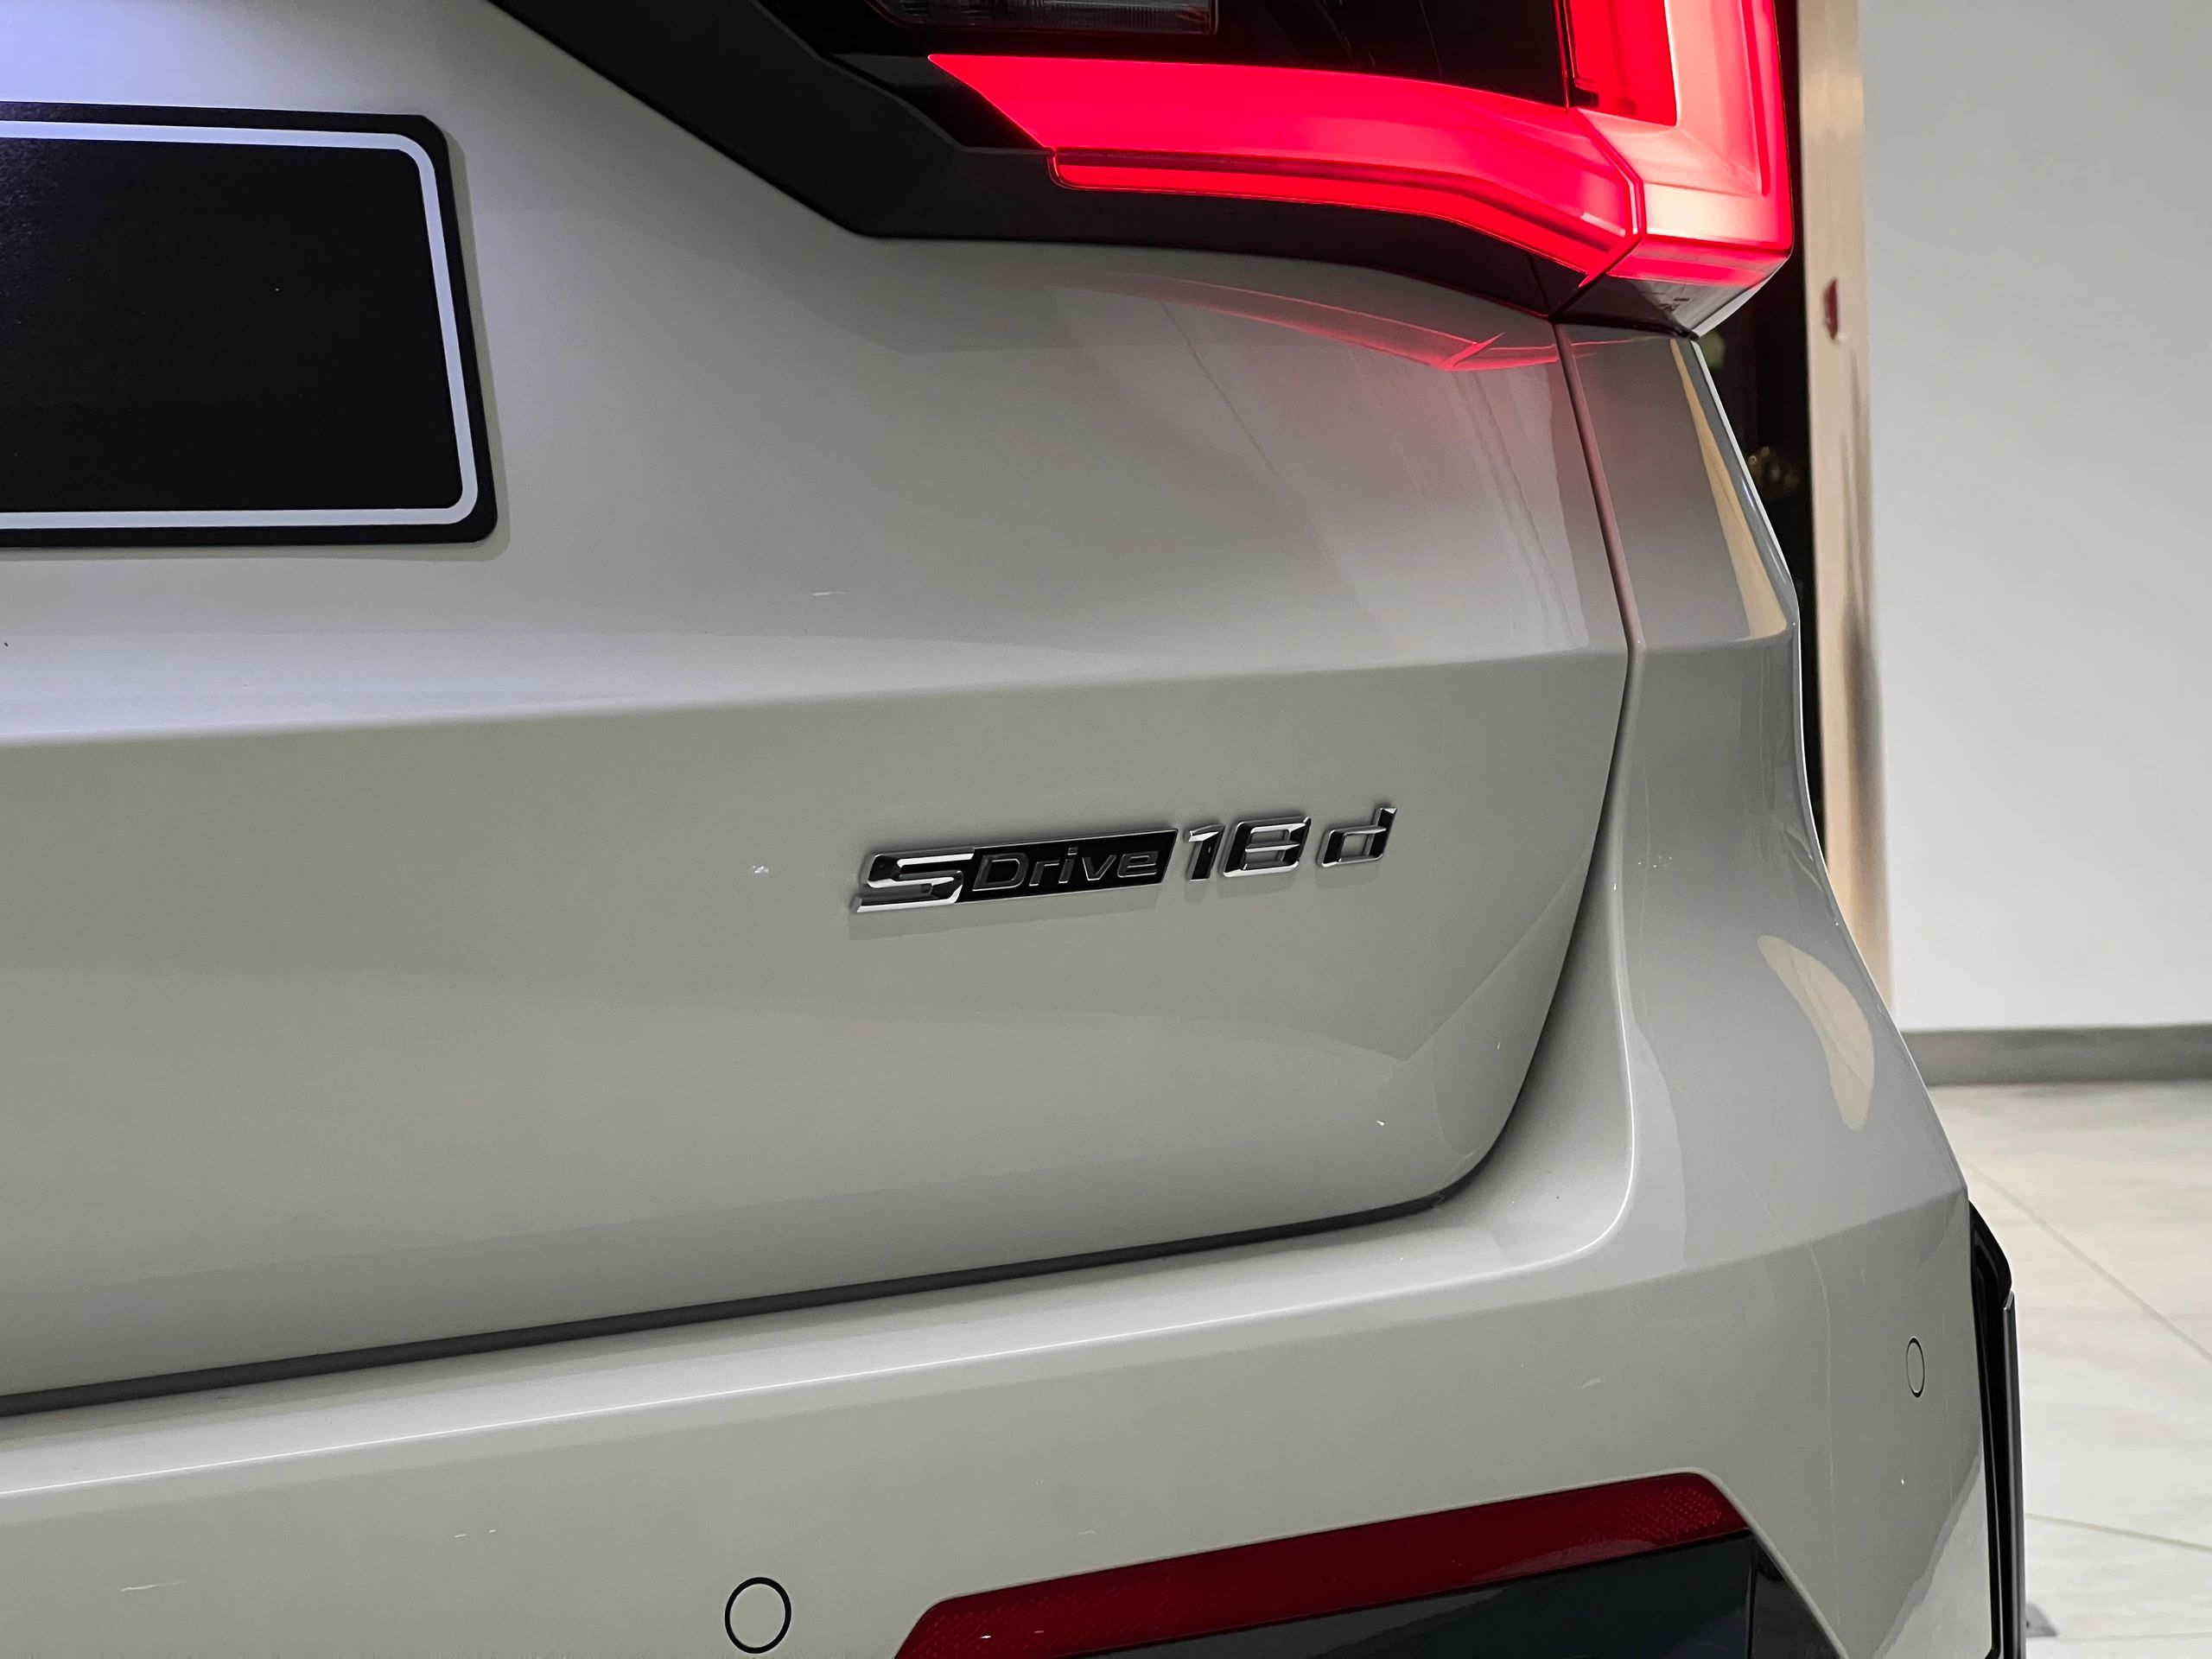 BMW X1 U11 Hybrid - 21 May 2023 - Autogespot